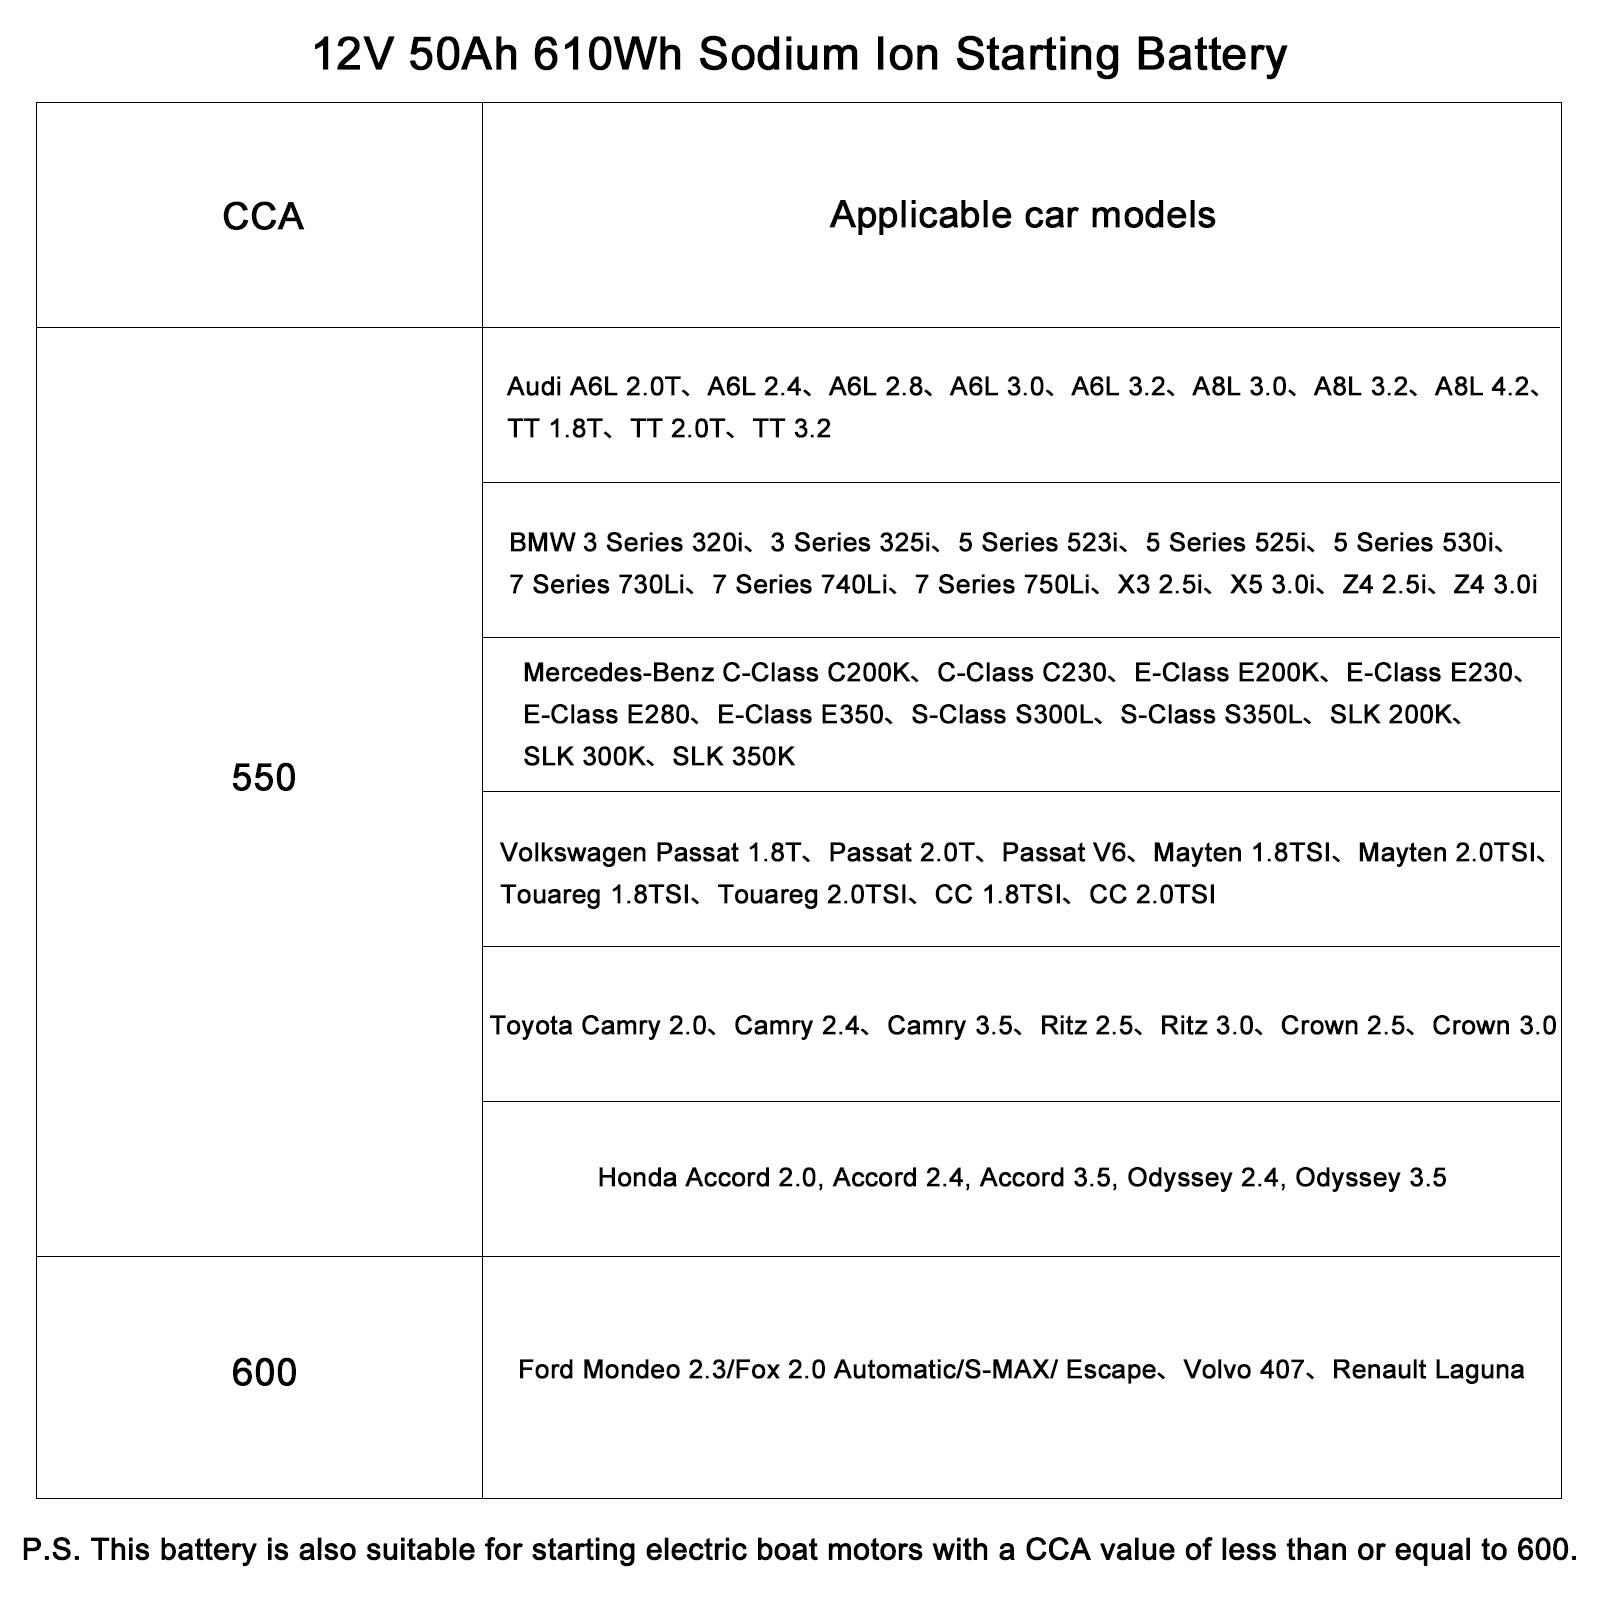 LANPWR Group-47 H5 Sodium-ion Car Battery 12V 50Ah 610Wh